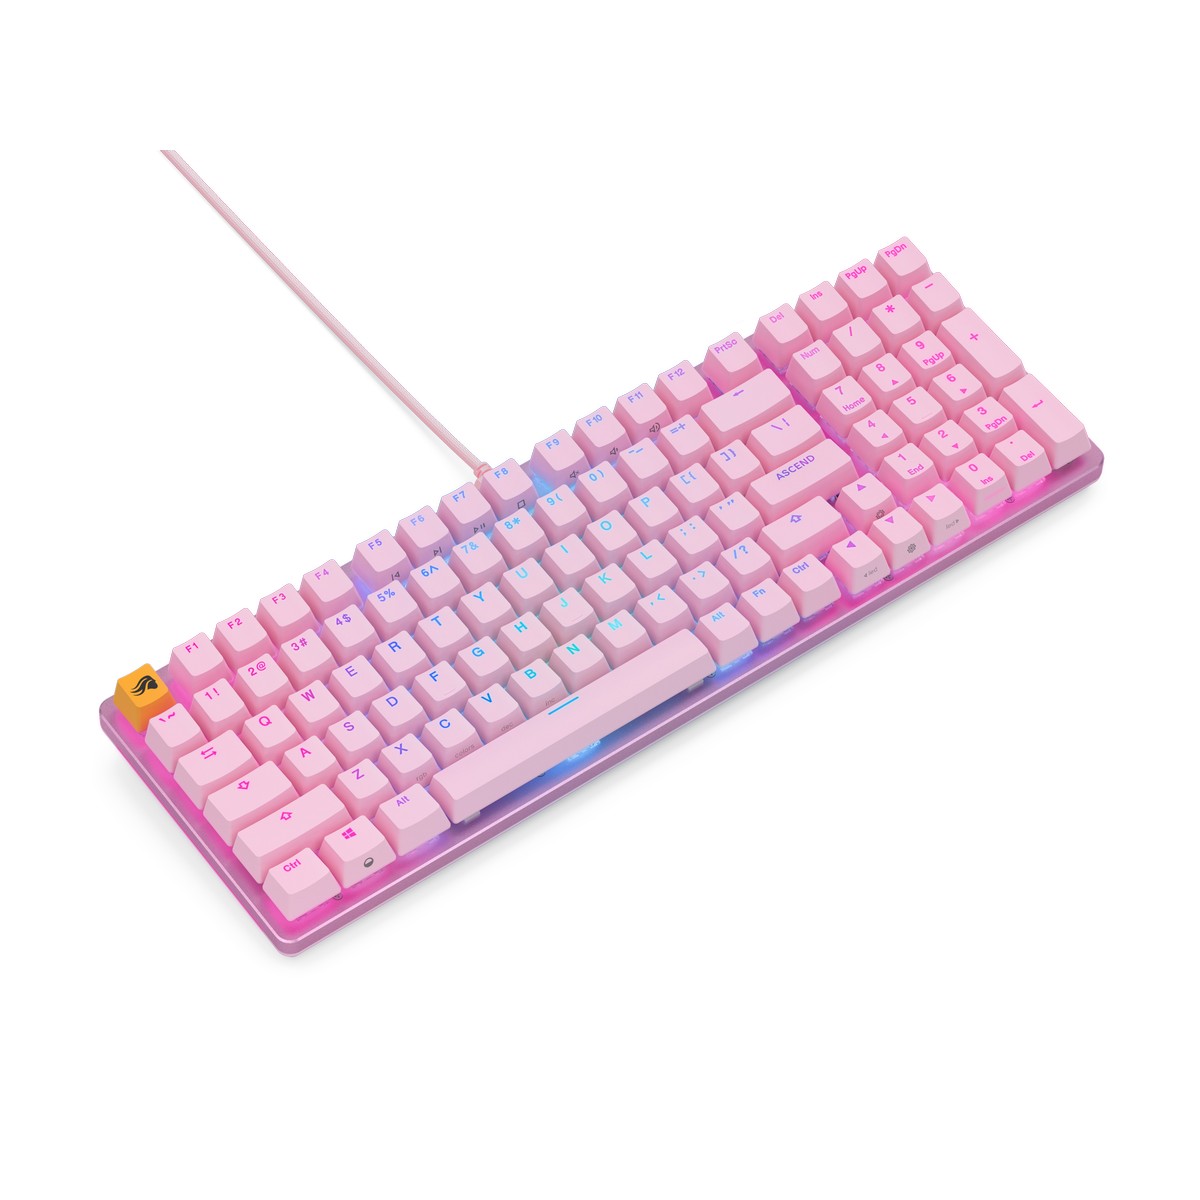 Glorious - Glorious GMMK 2 96% RGB USB Mechanical Gaming Keyboard UK ISO - Pink (GLO-GMMK2-96-FOX-ISO-P-UK)